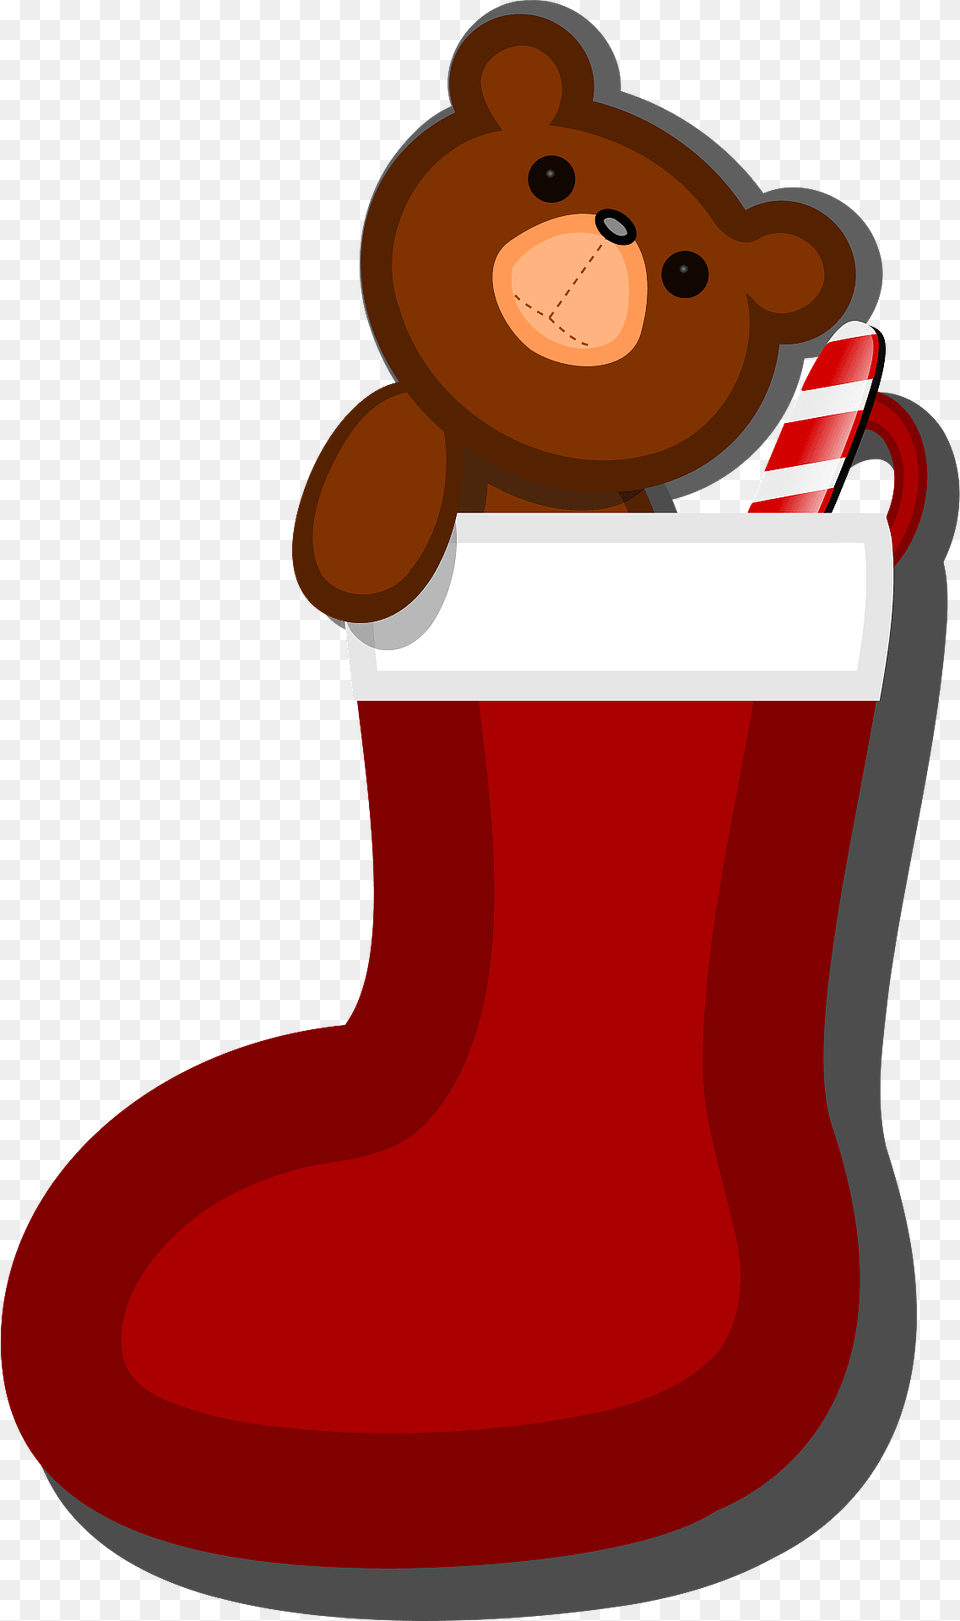 Teddy Bear Stocking Clipart, Hosiery, Clothing, Christmas, Festival Png